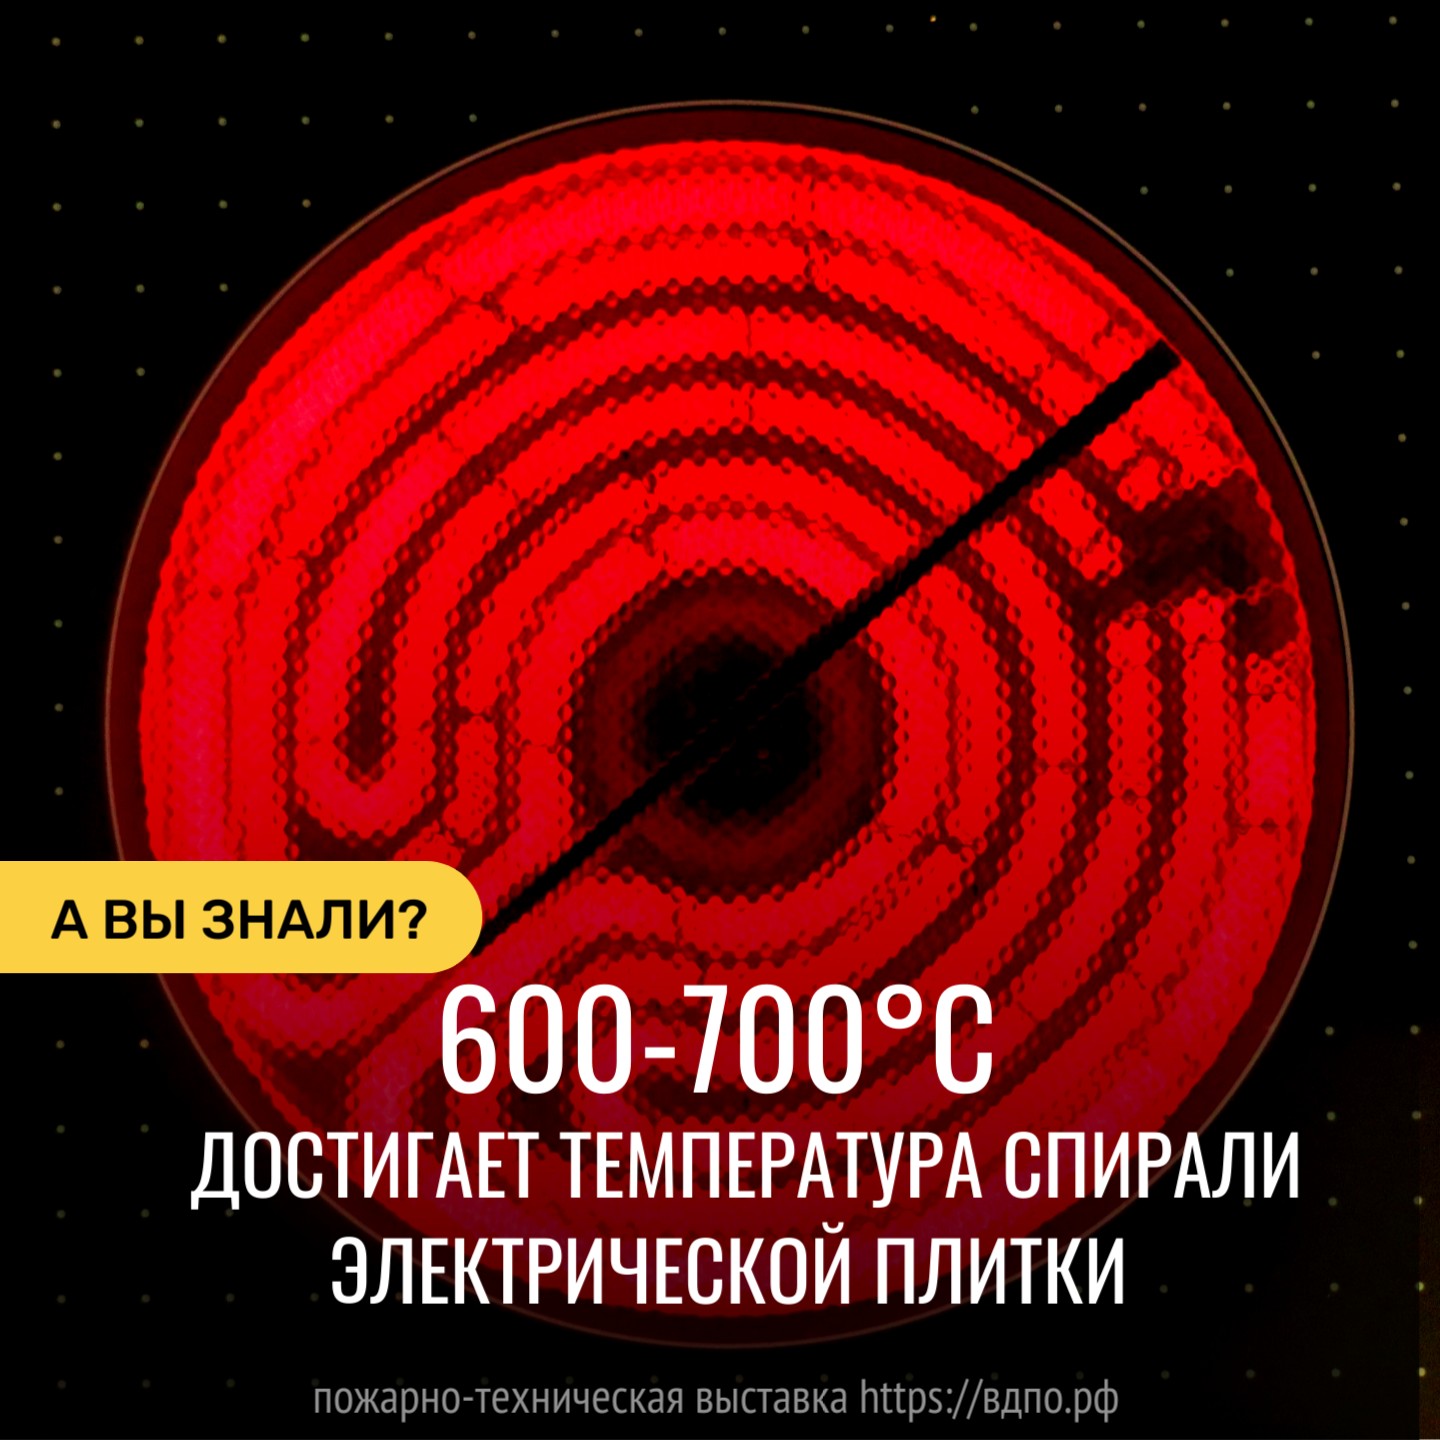 Температура спирали электрической плитки достигает 600-700°С  Нагрев спирали электрической плитки достигает температуры 600-700°С, а основания плитки......